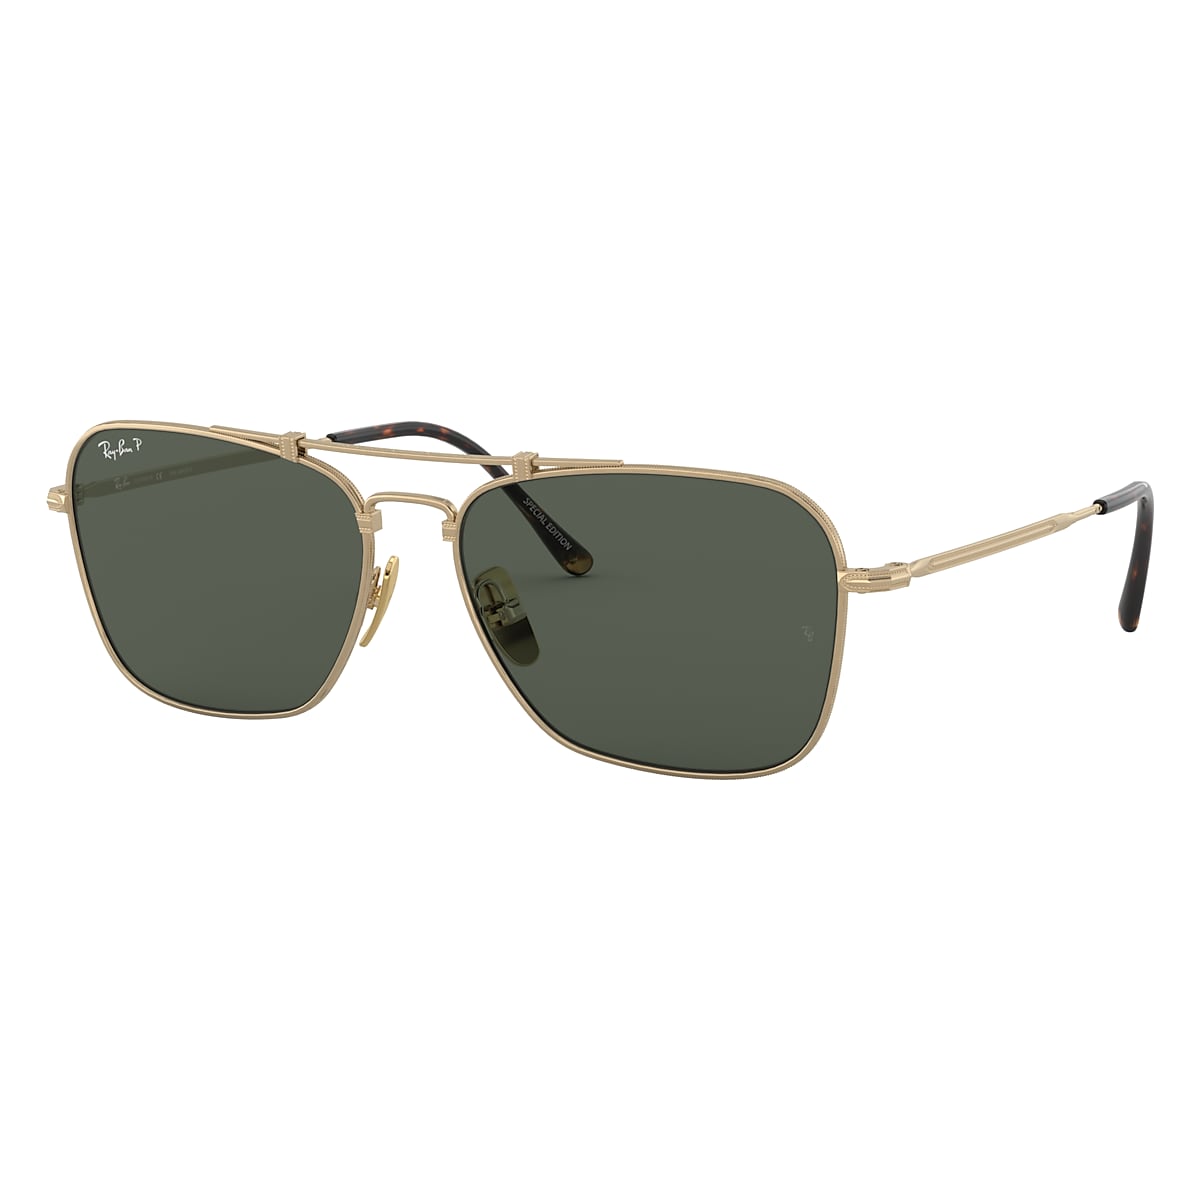 CARAVAN TITANIUM Sunglasses in Gold and Green - Ray-Ban